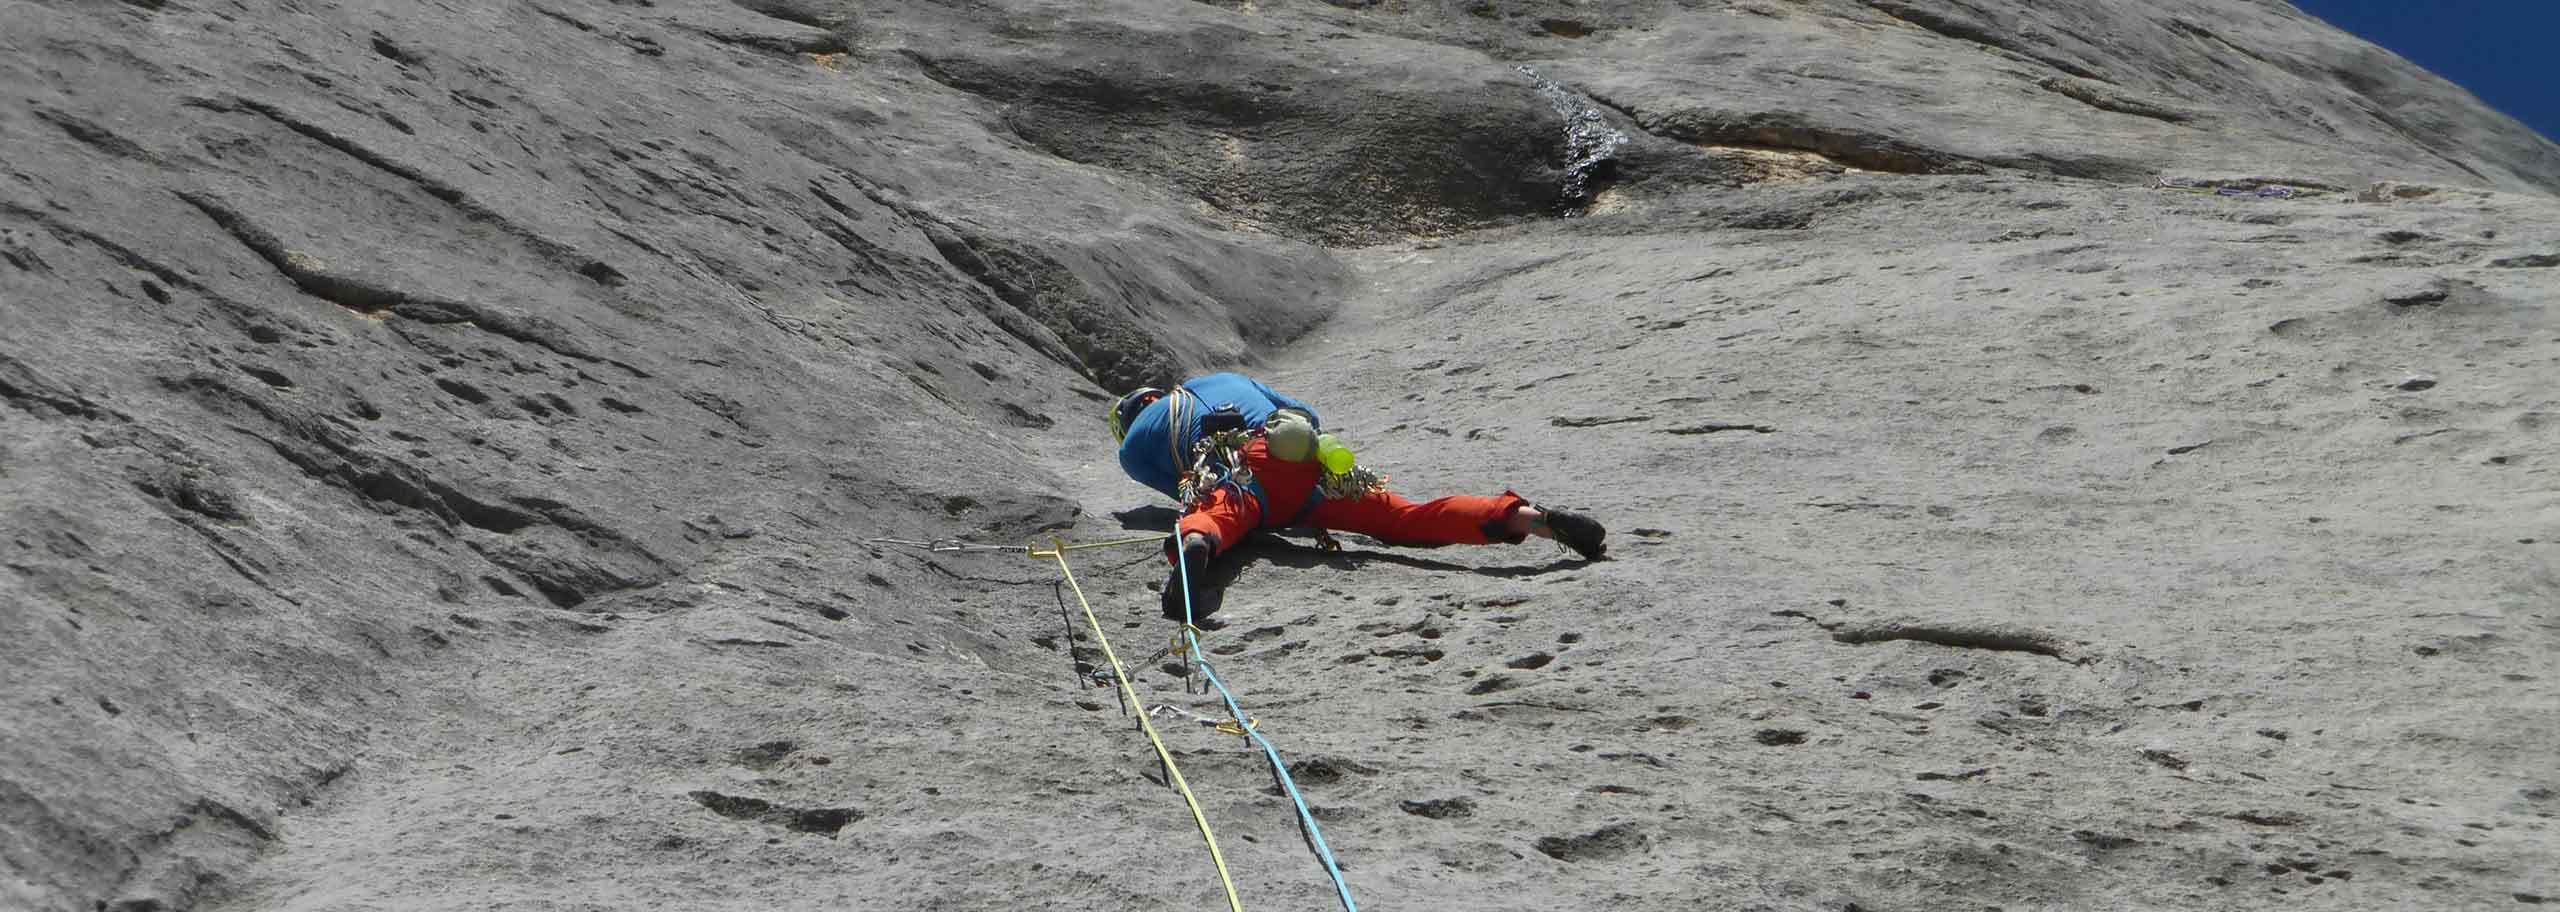 Rock Climbing in Marmolada with Mountain Guide